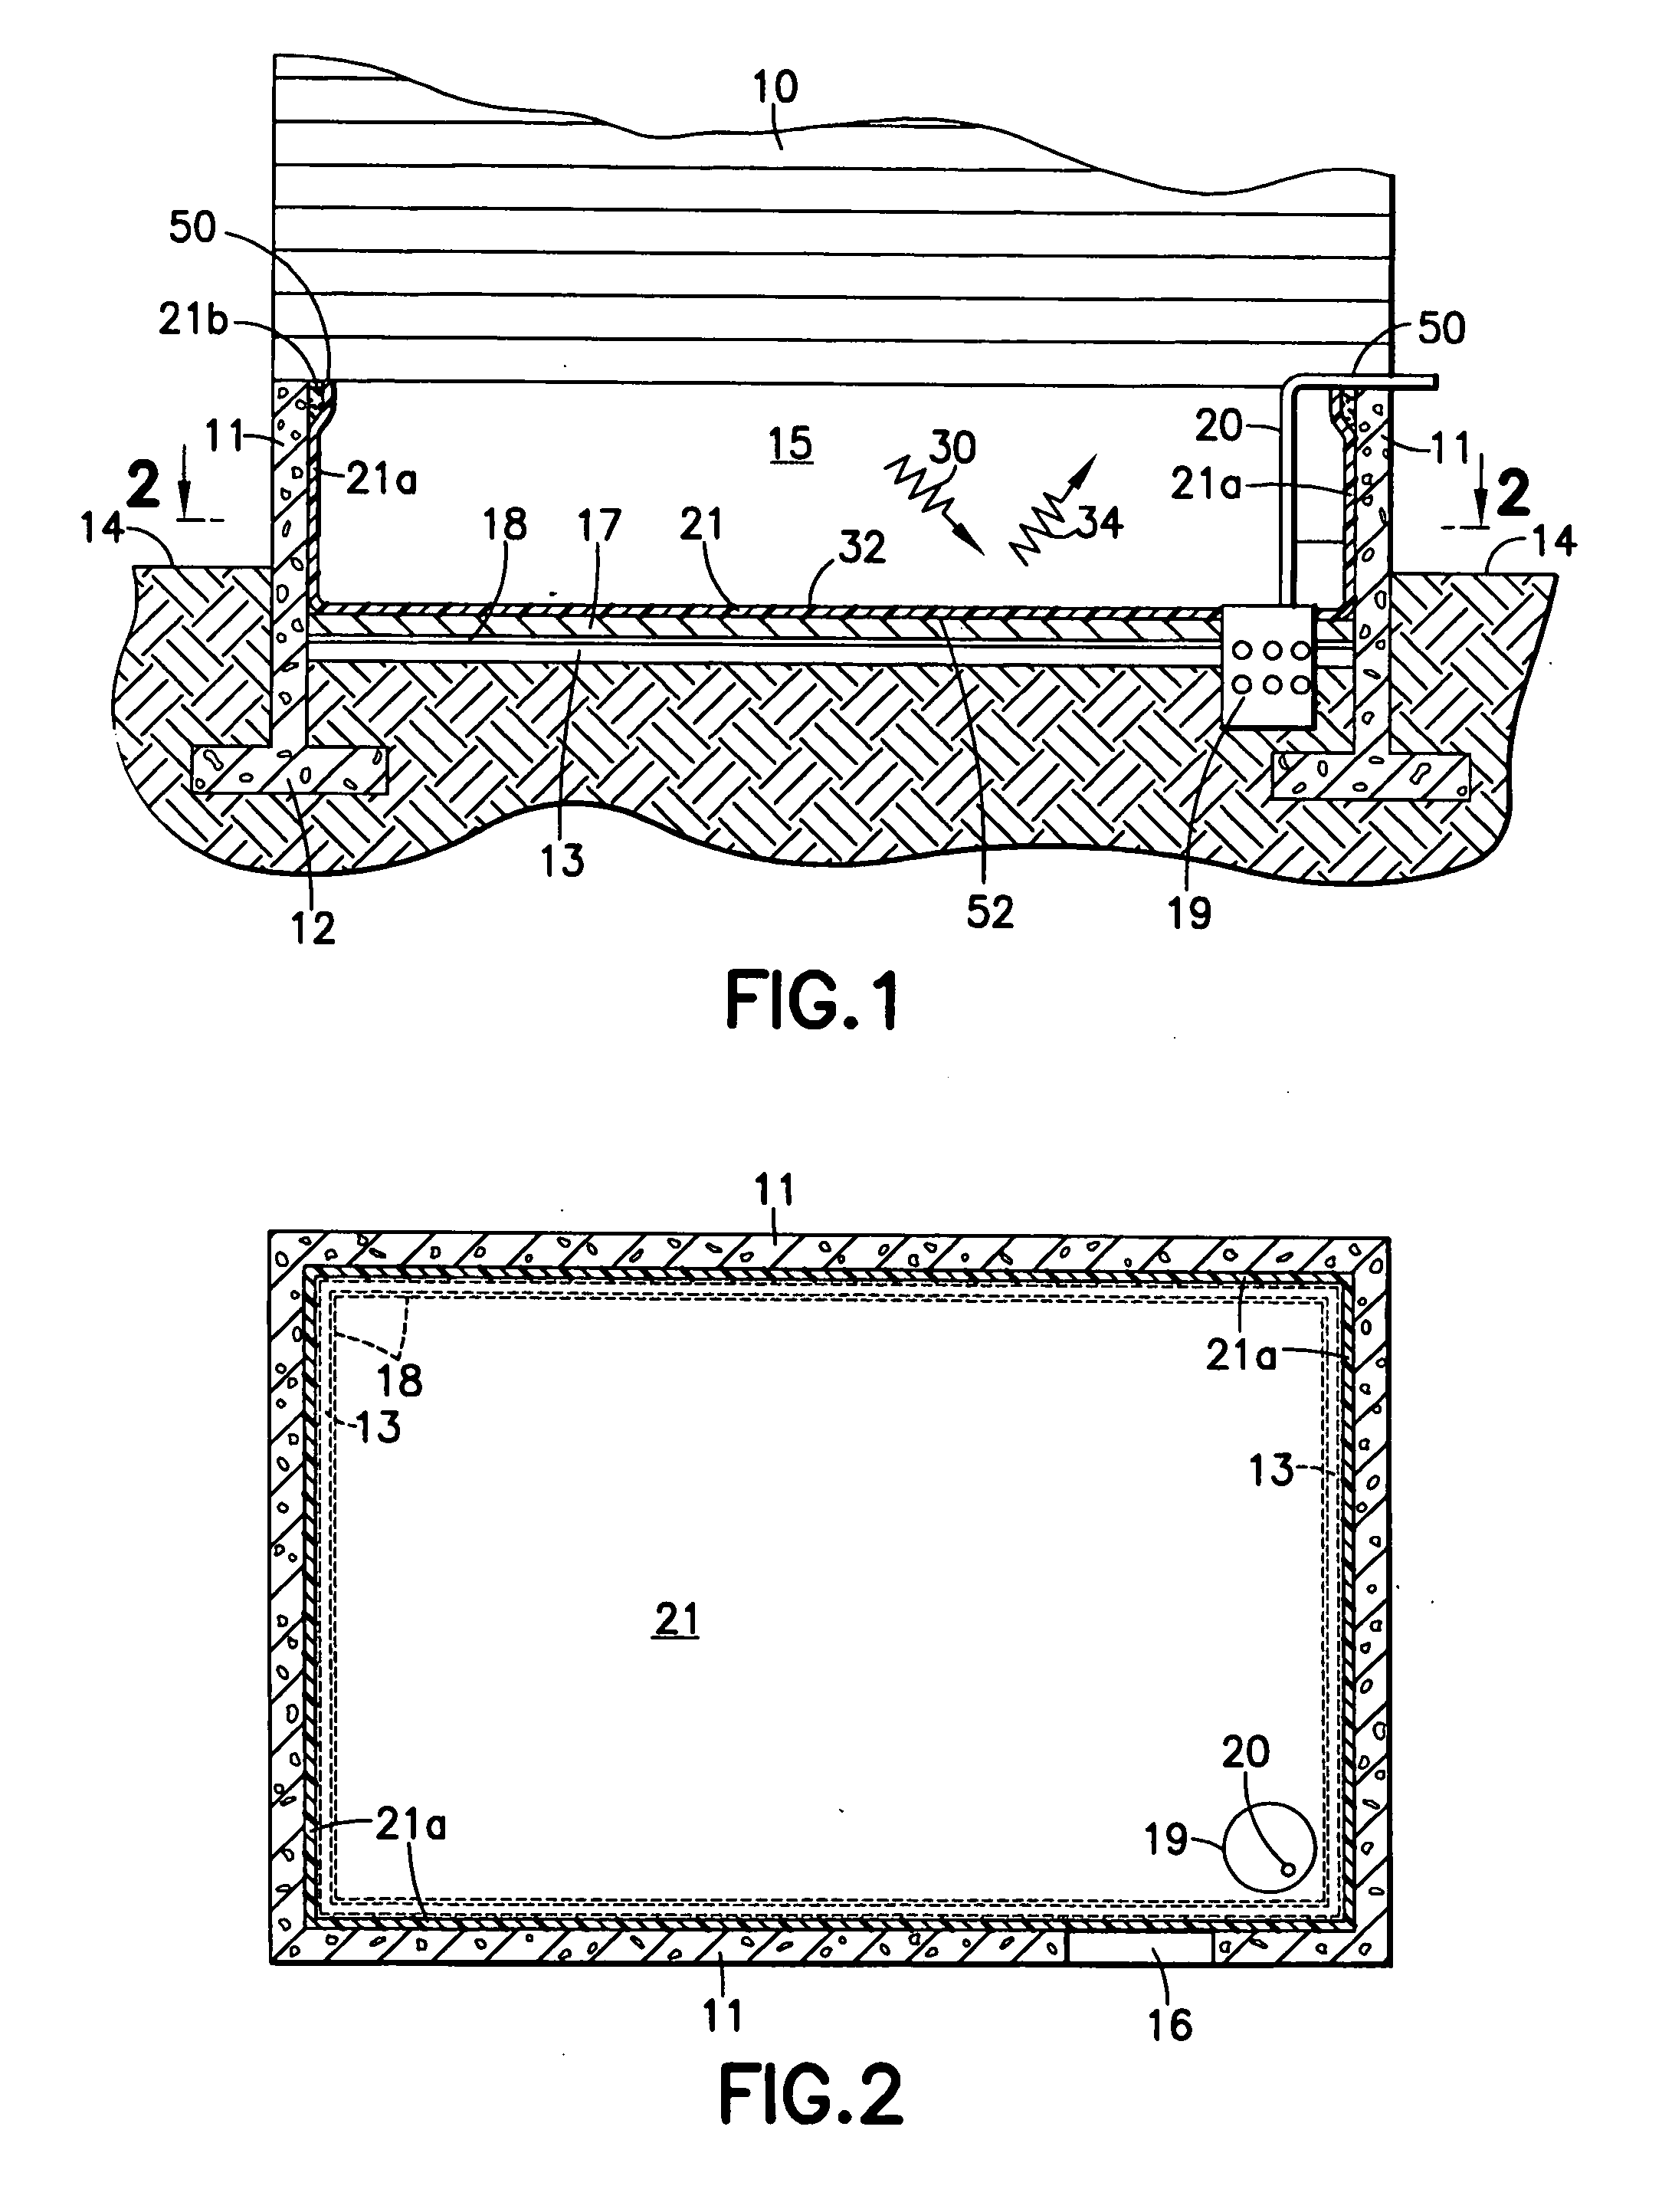 Subterranean chamber encapsulation system